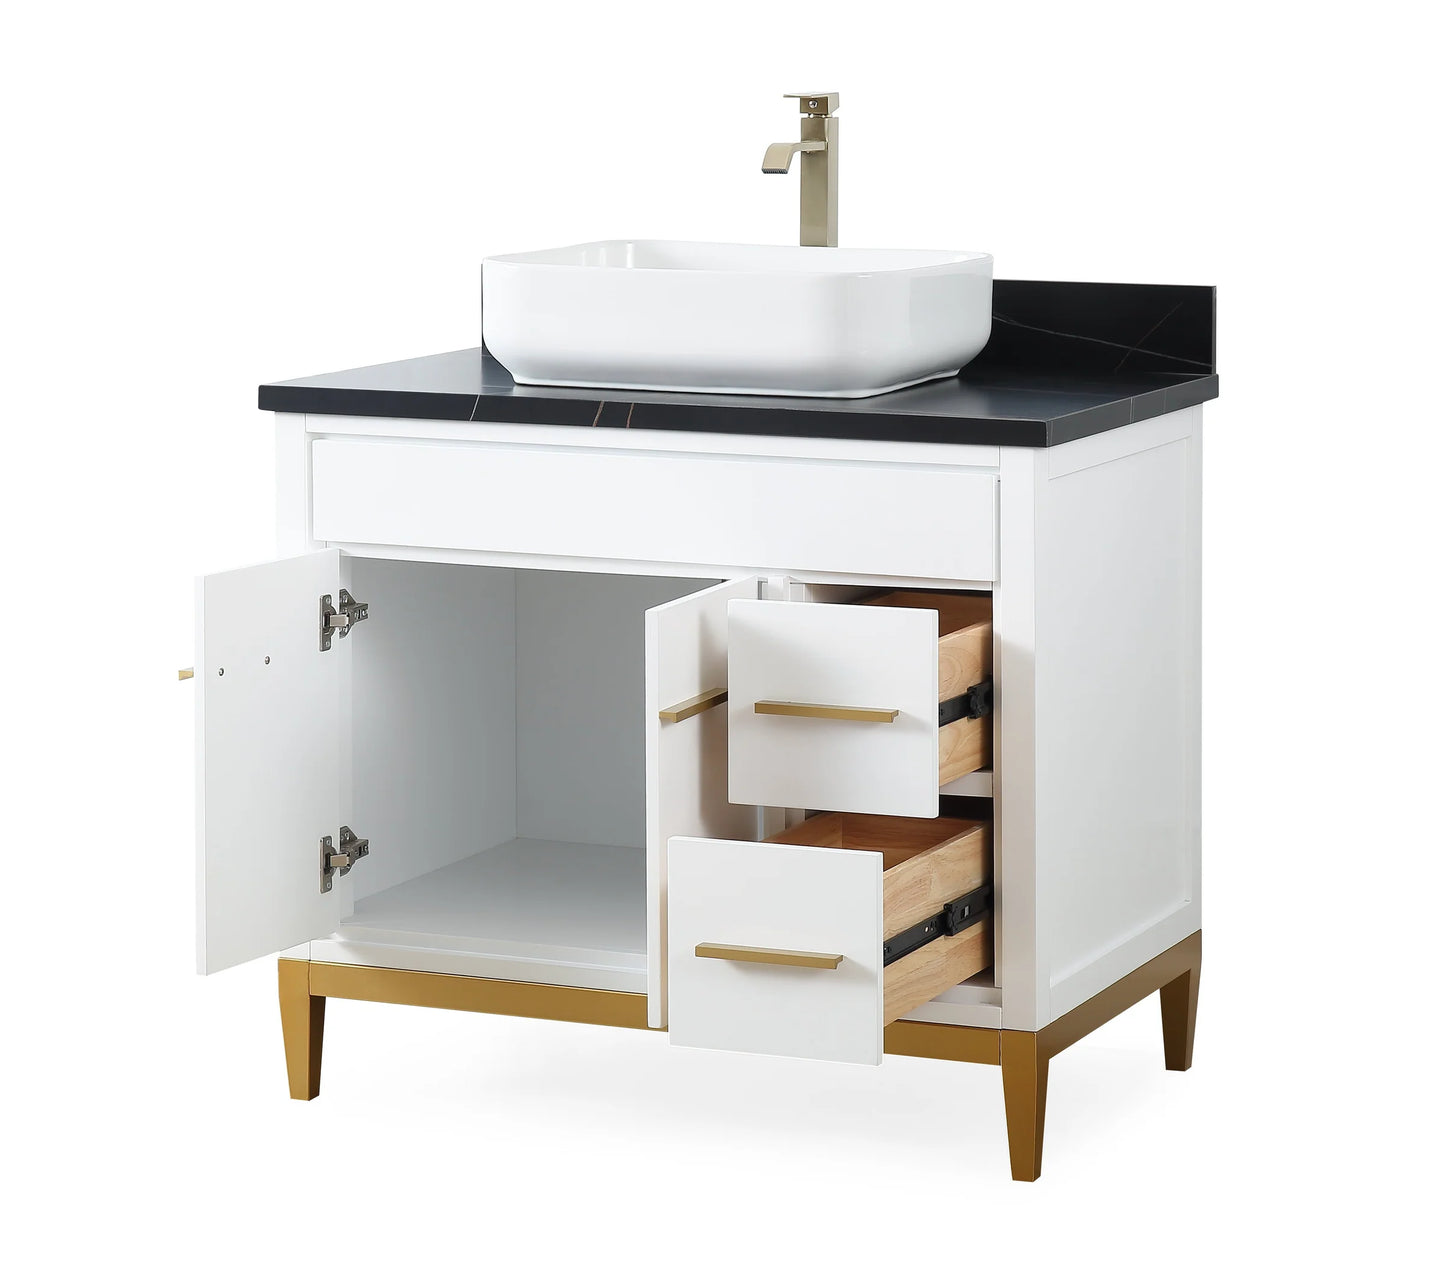 Beatrice 36" Modern Style White Vessel Sink vanity -TB-9936W-36BK-Tennant Brand